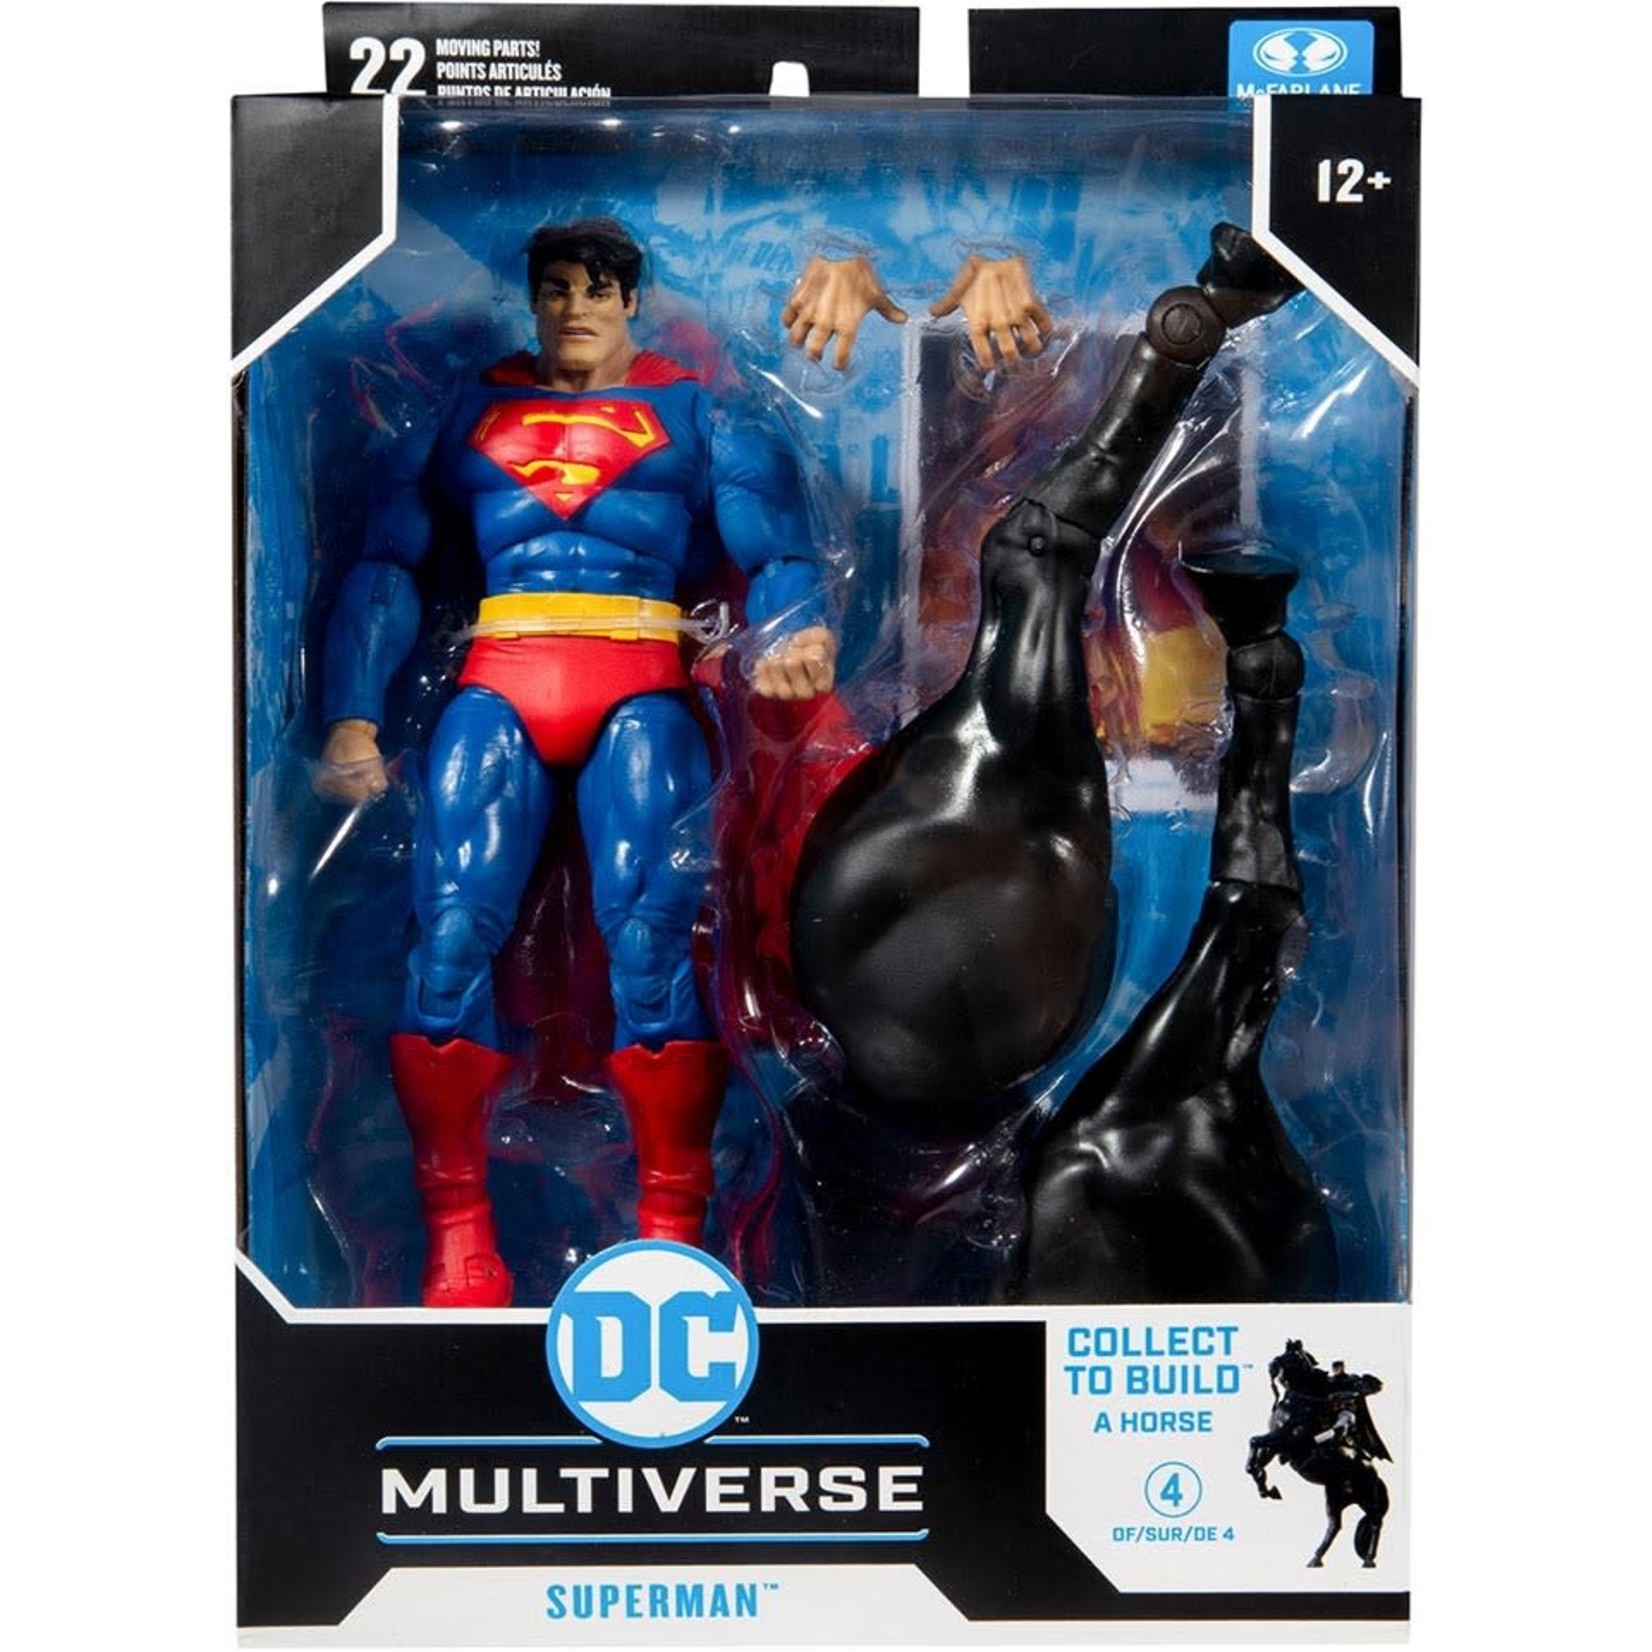 McFarlane Toys DC Multiverse The Dark Knight Returns 7 Inch Action Figure BAF Batman Horse - Superman